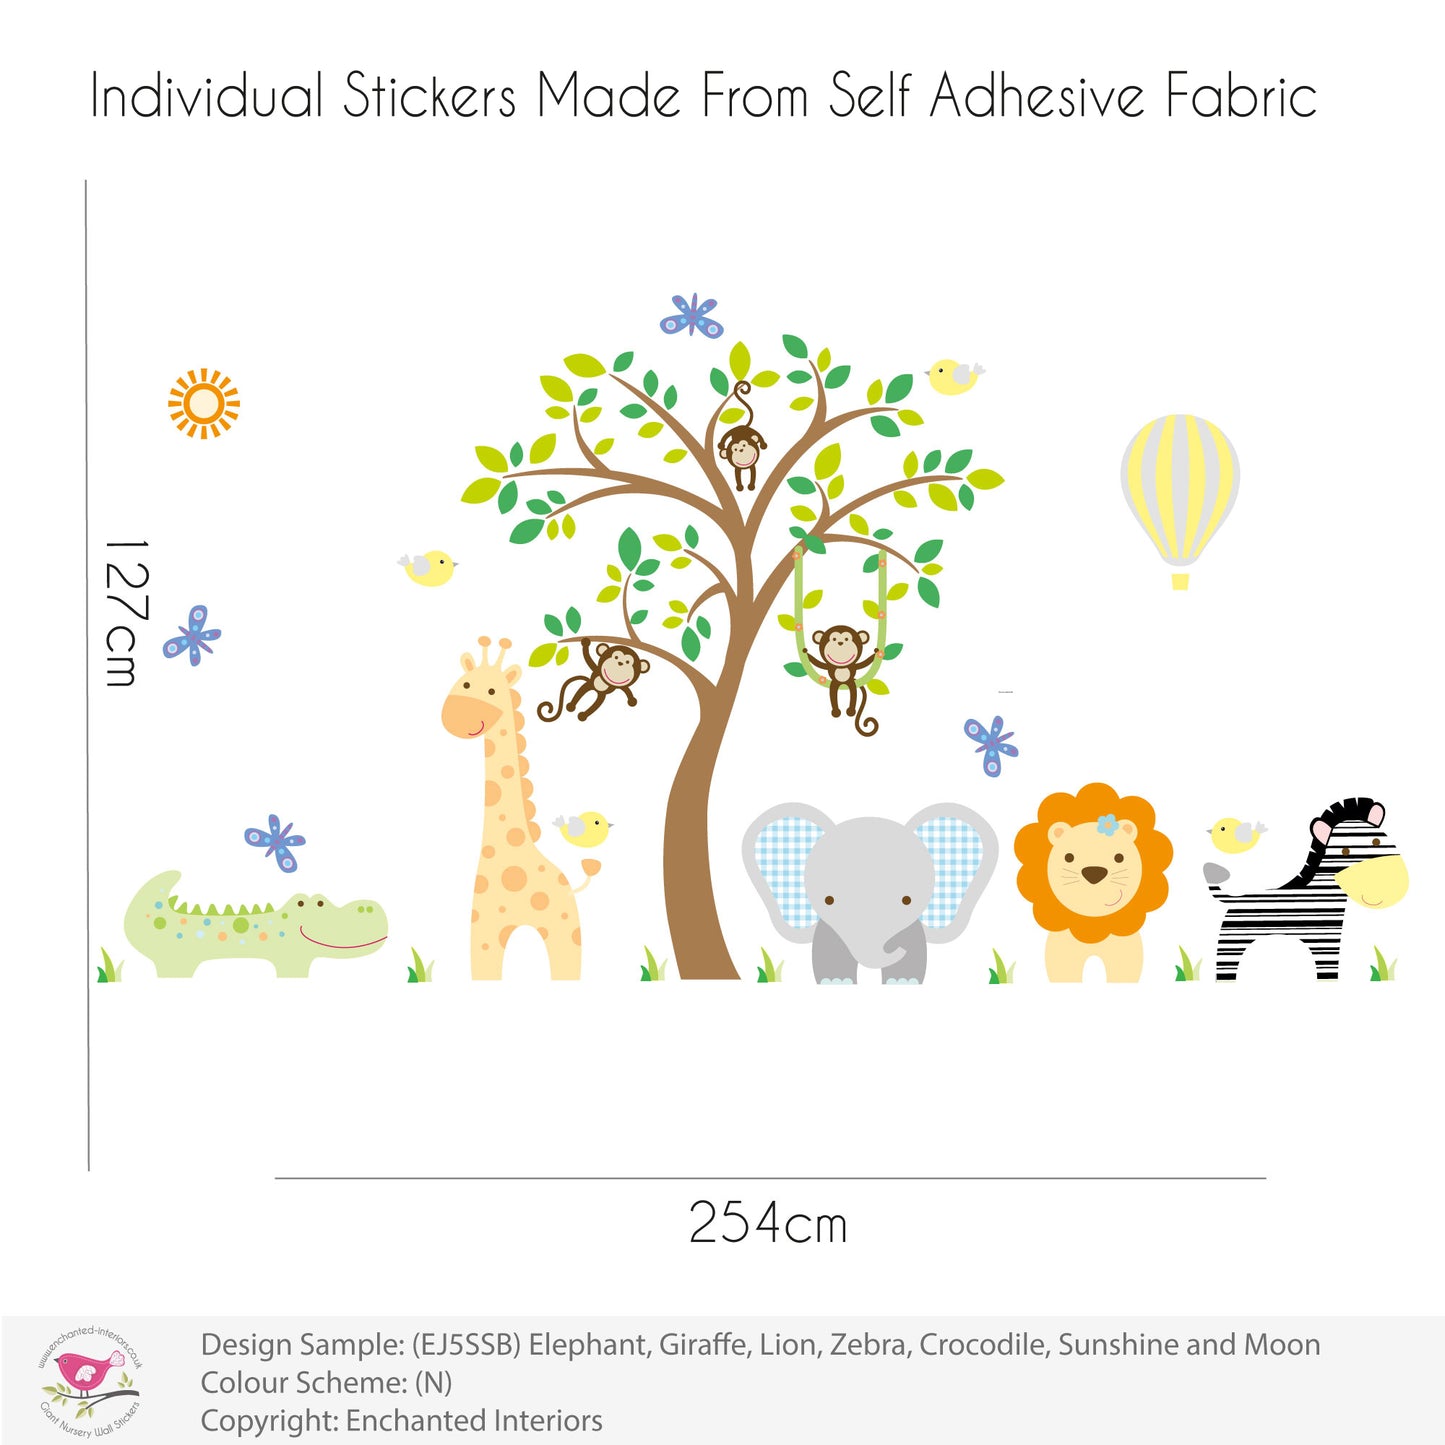 Jungle Wall Stickers Gender Neutral Baby Nursery